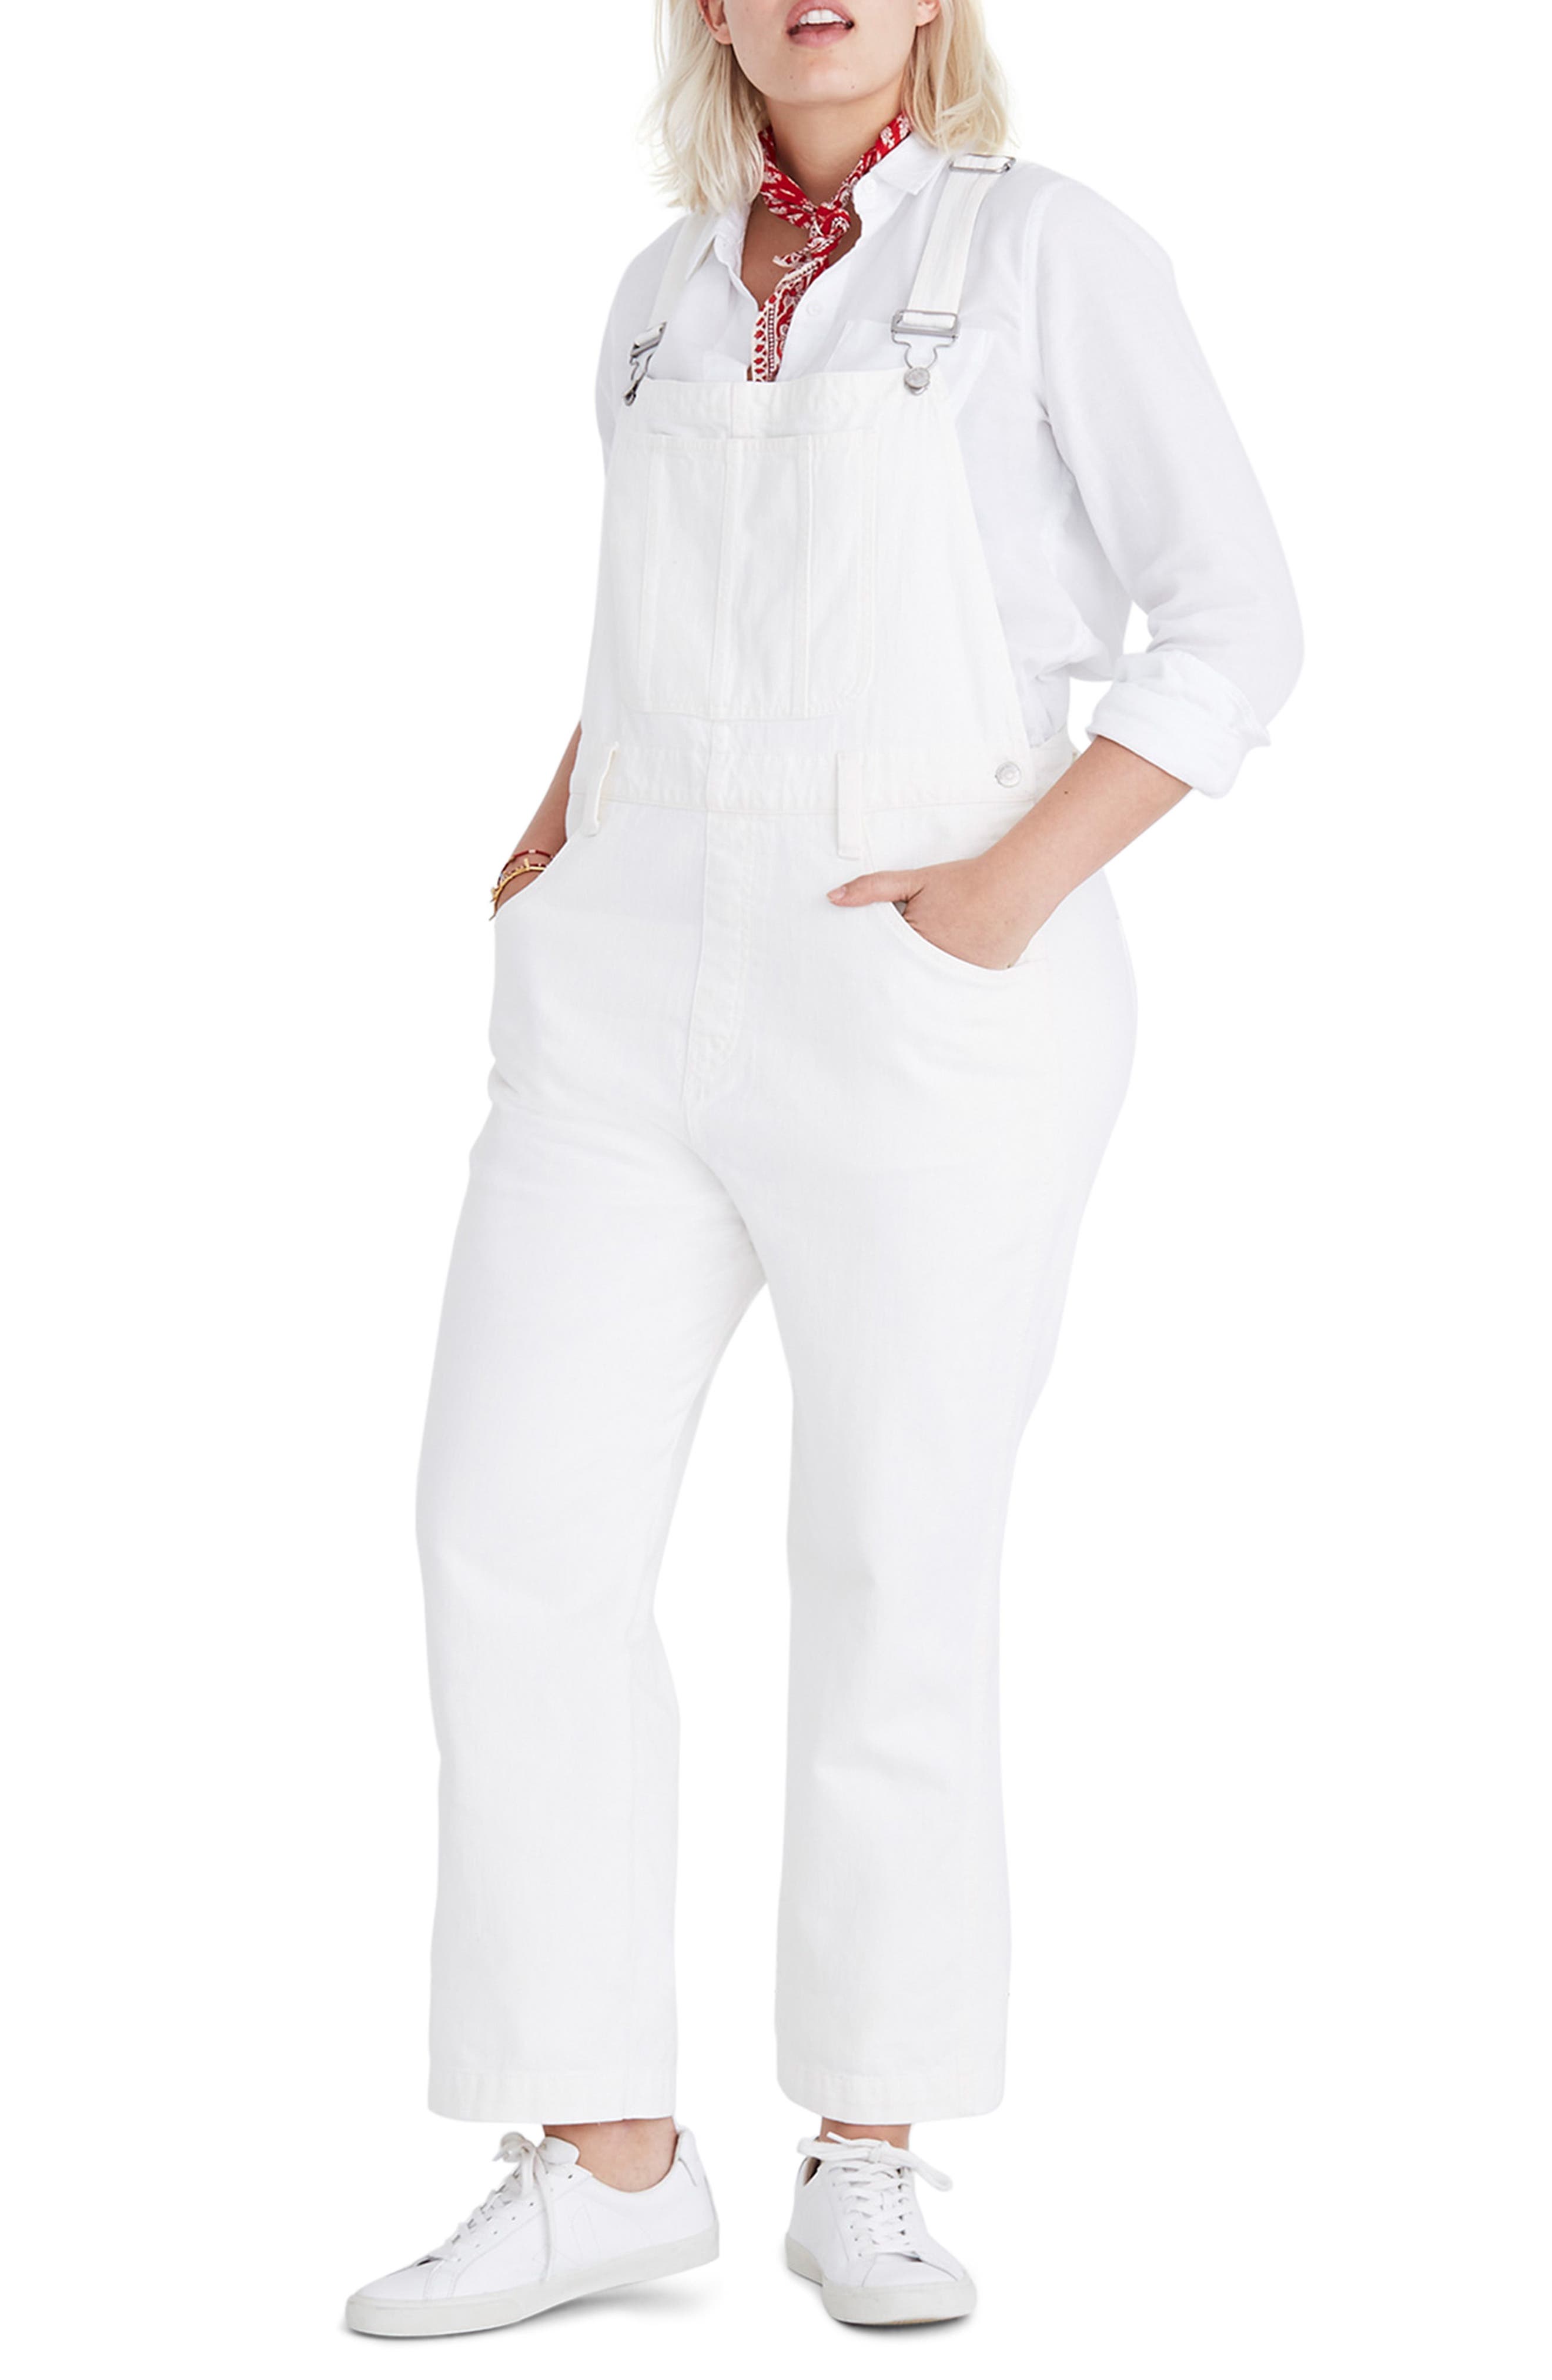 madewell white overalls